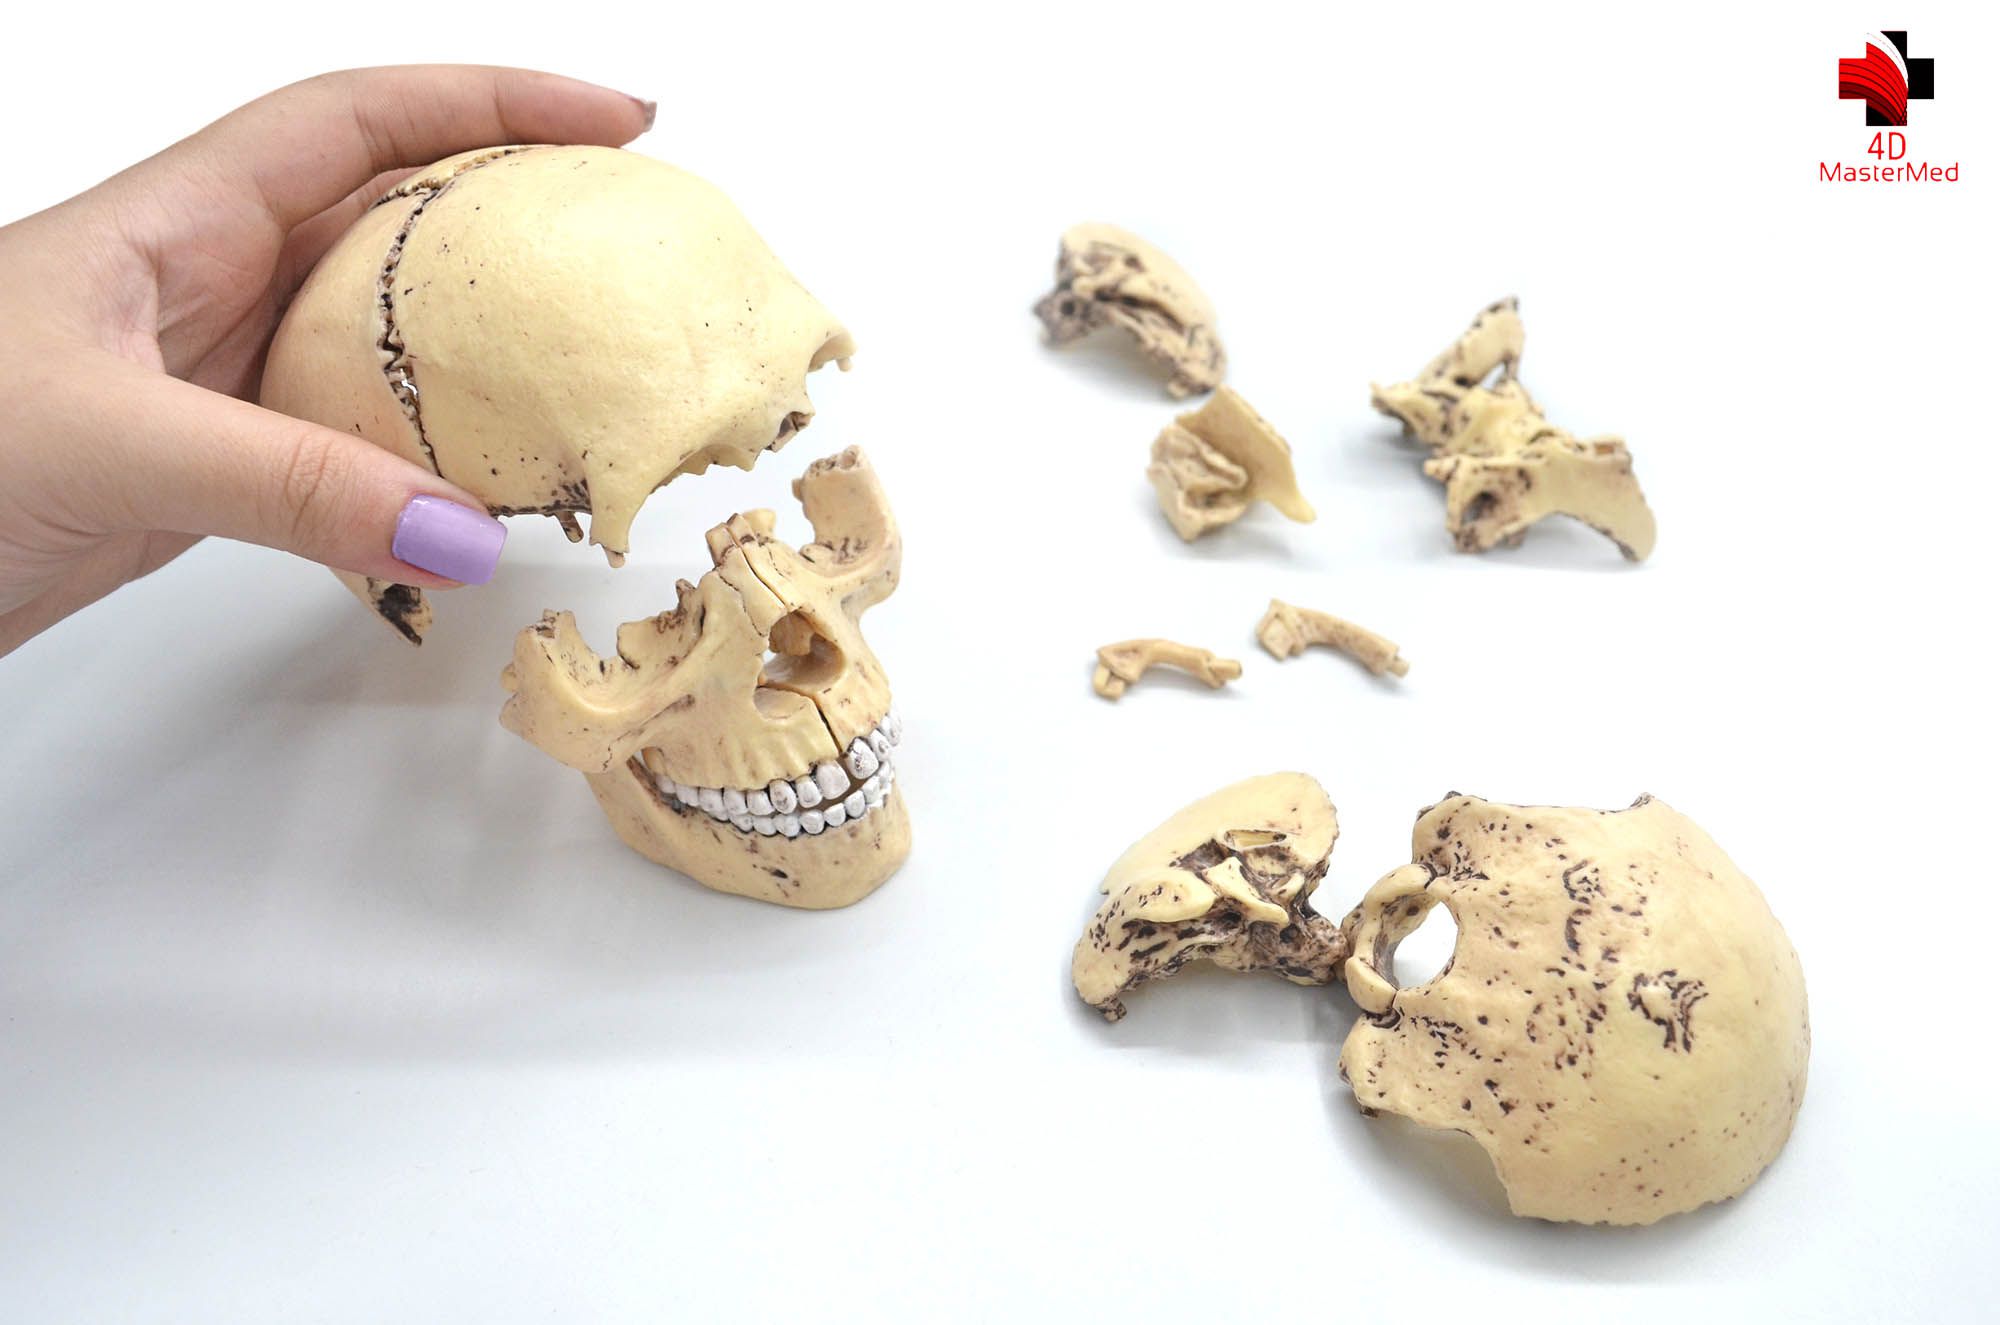 Anatomia do Crânio - 4D MasterMed